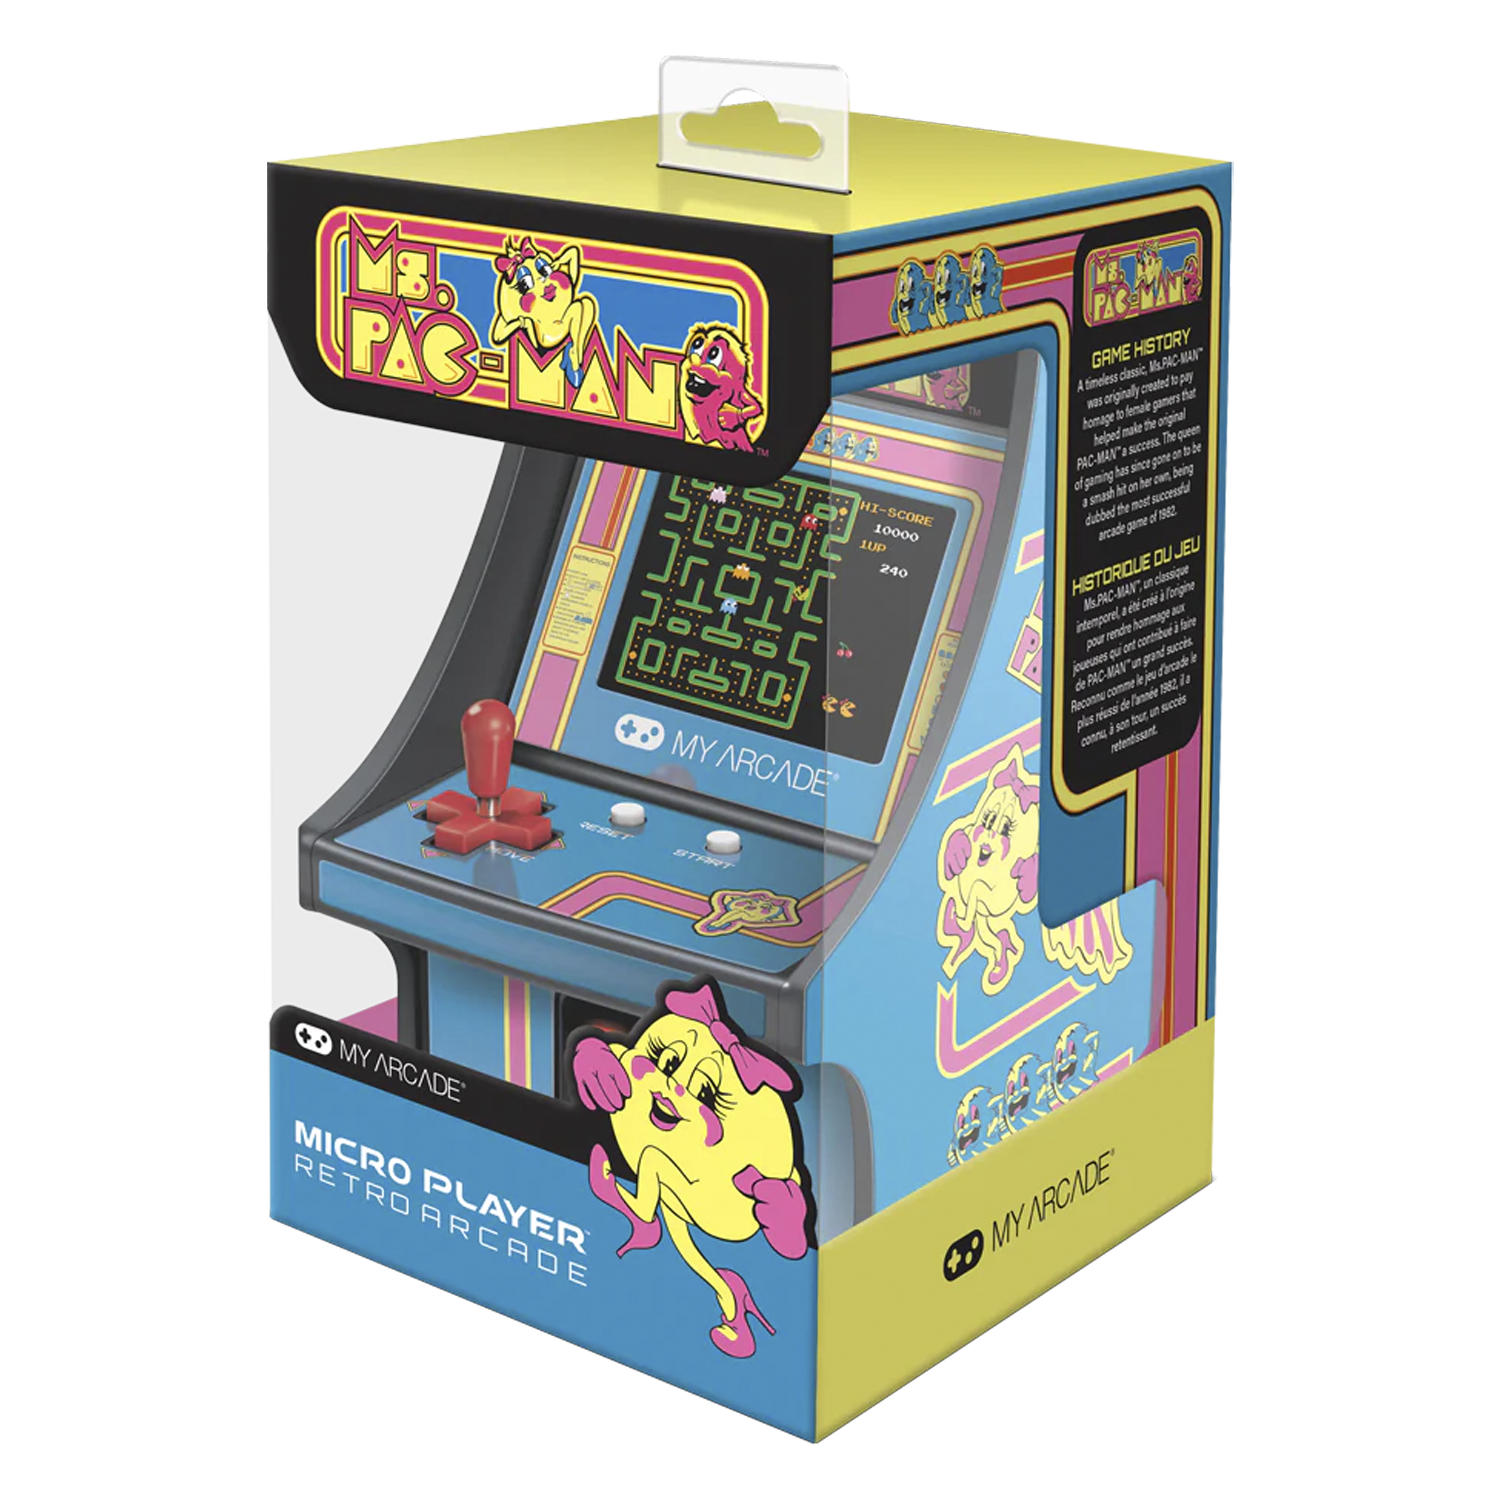 Console Dreamgear My Arcade Ms.Pac Man Micro Player - DGUNL-3230